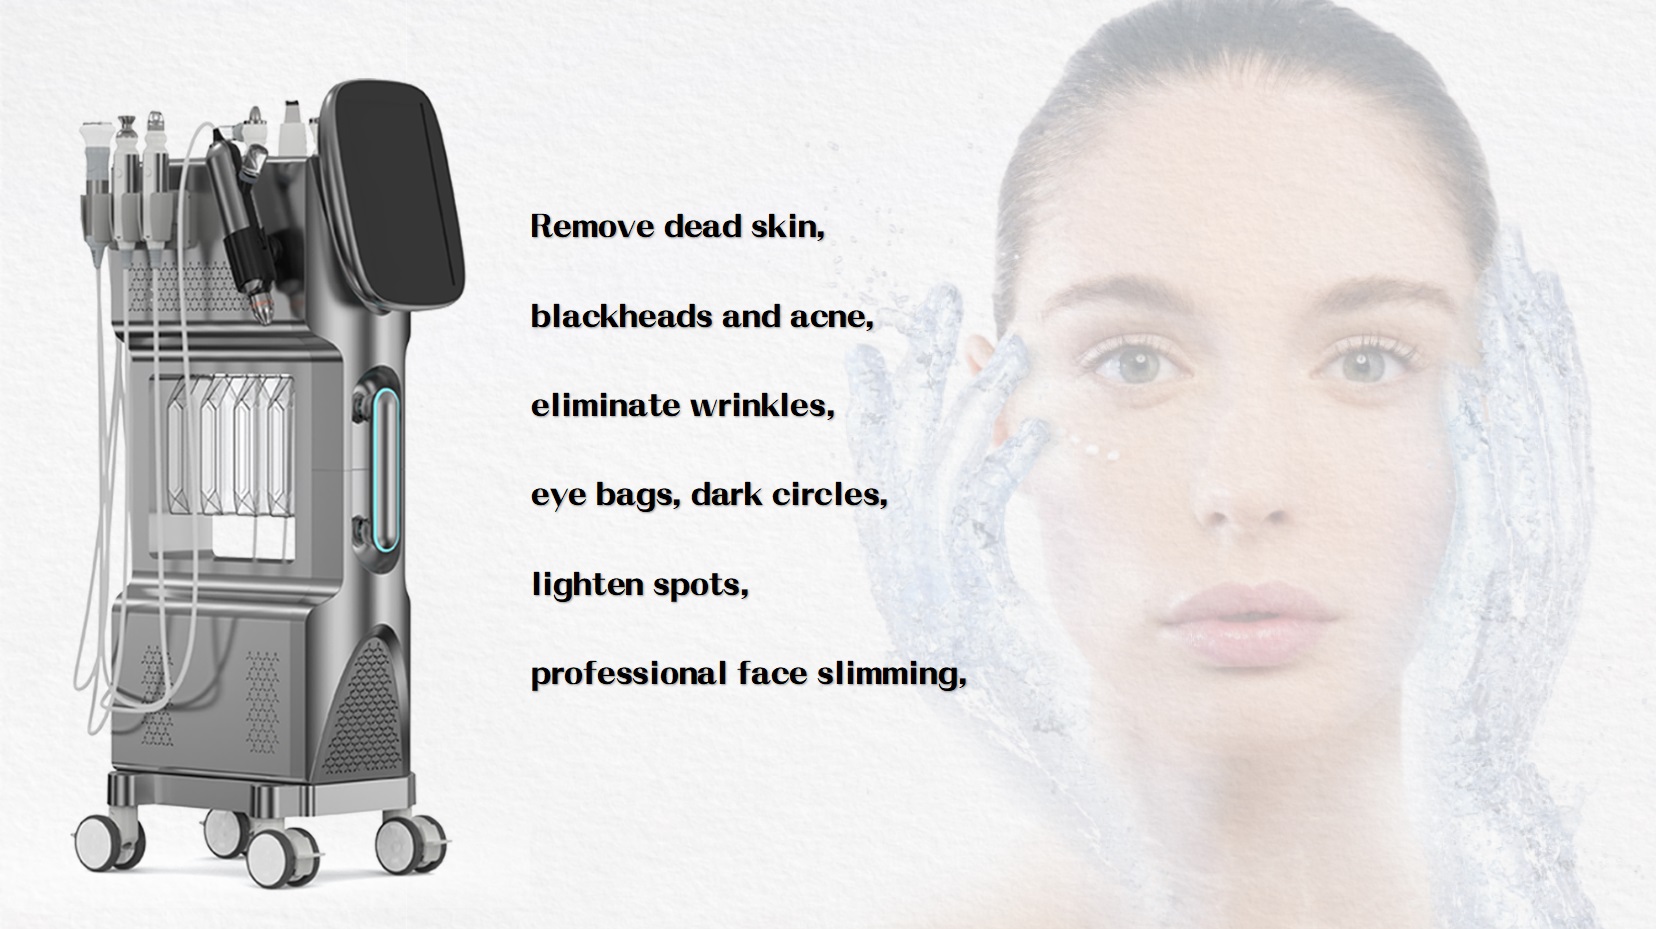 हाइड्रा माइक्रोडर्माब्रेशन मशीन: आपका अंतिम चेहरे का सौंदर्य समाधान~~